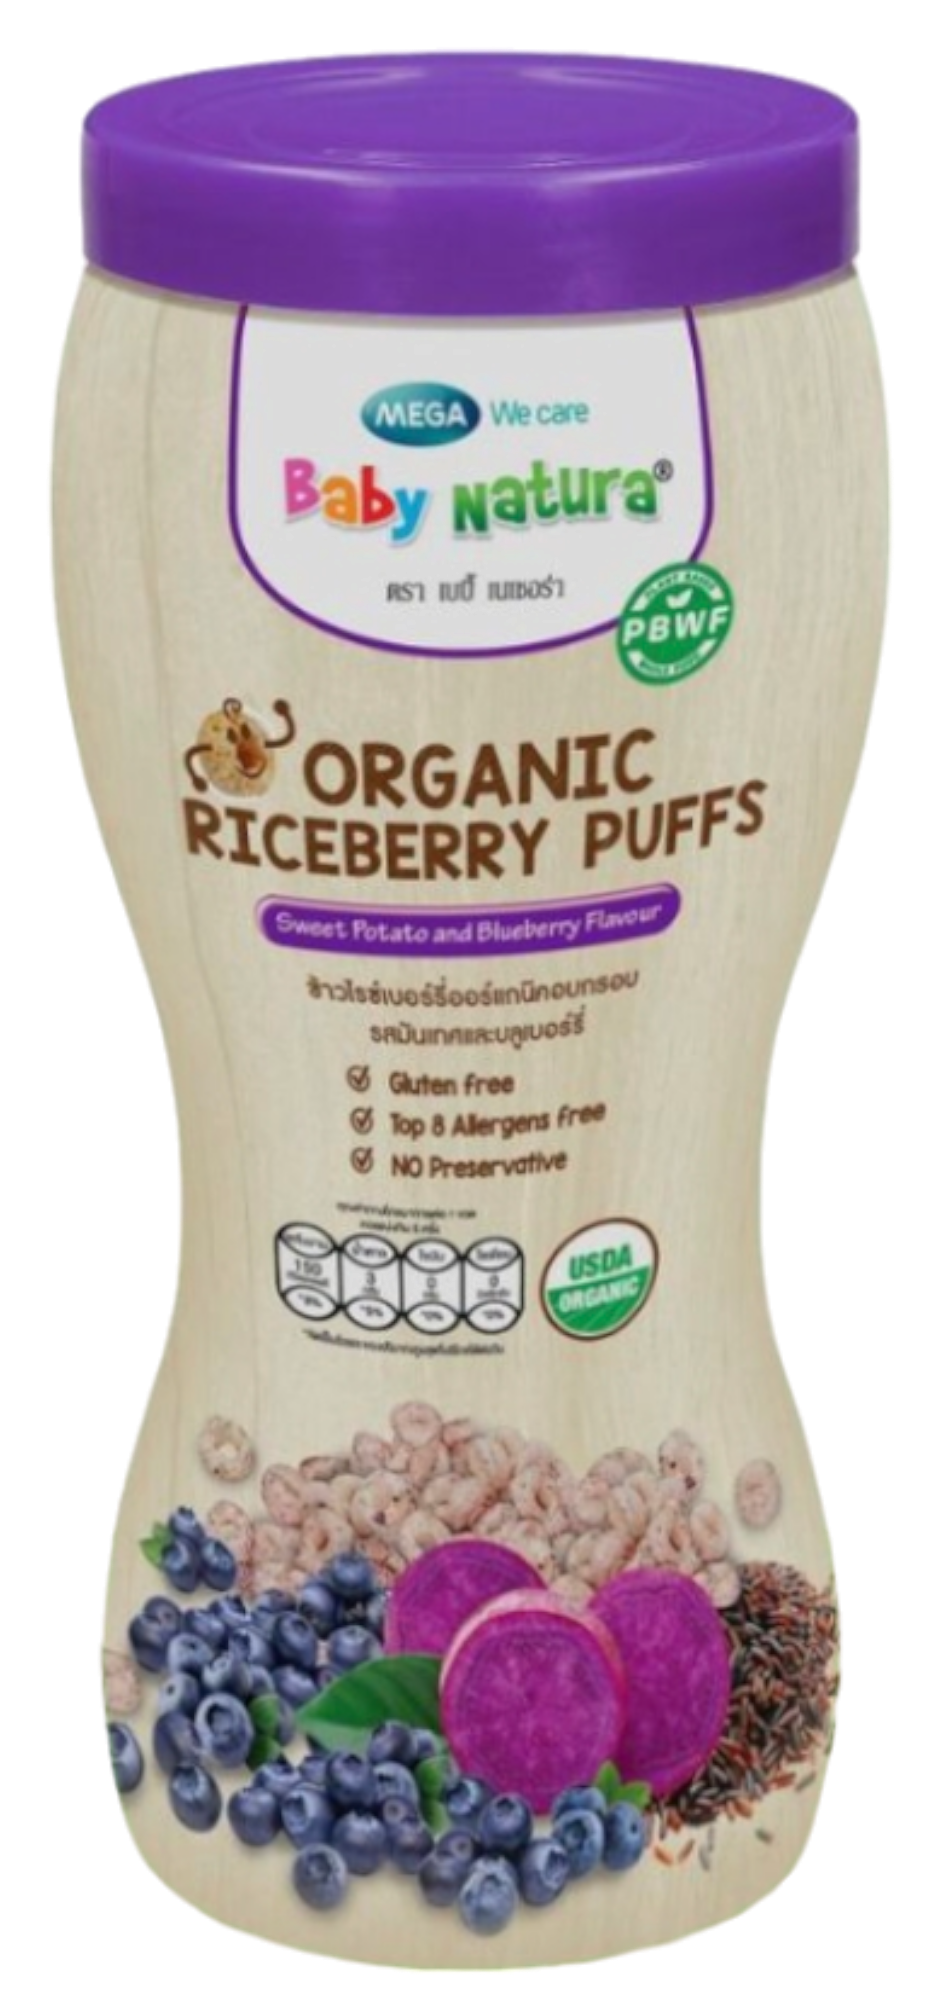 Baby Natura Organic Riceberry Puffs Sweet Potato and Blueberry 40g